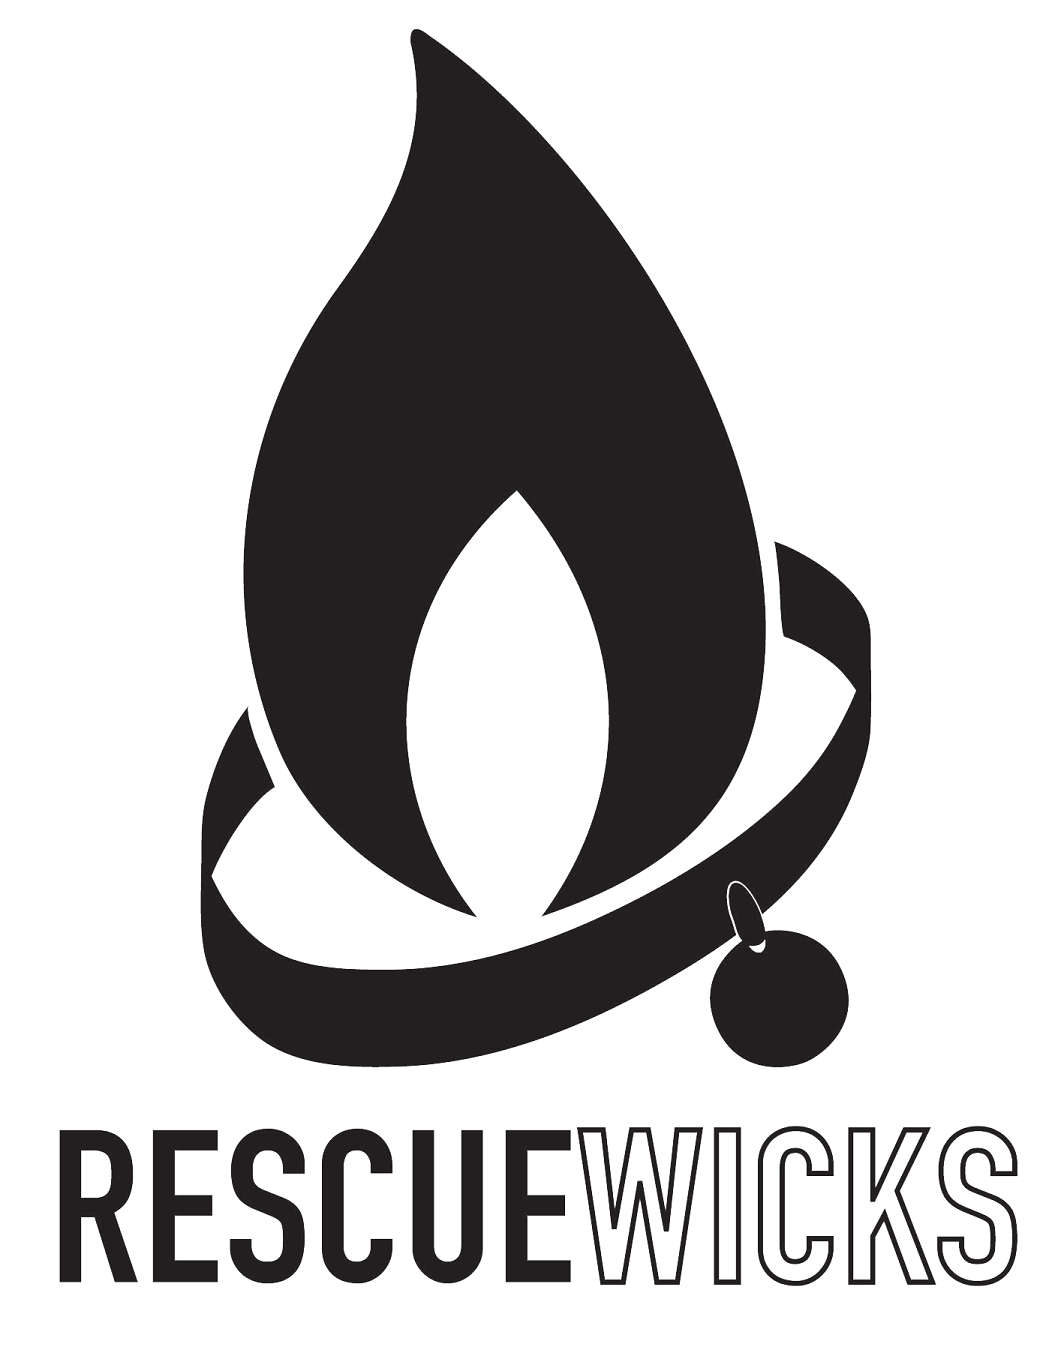 Rescuewicks